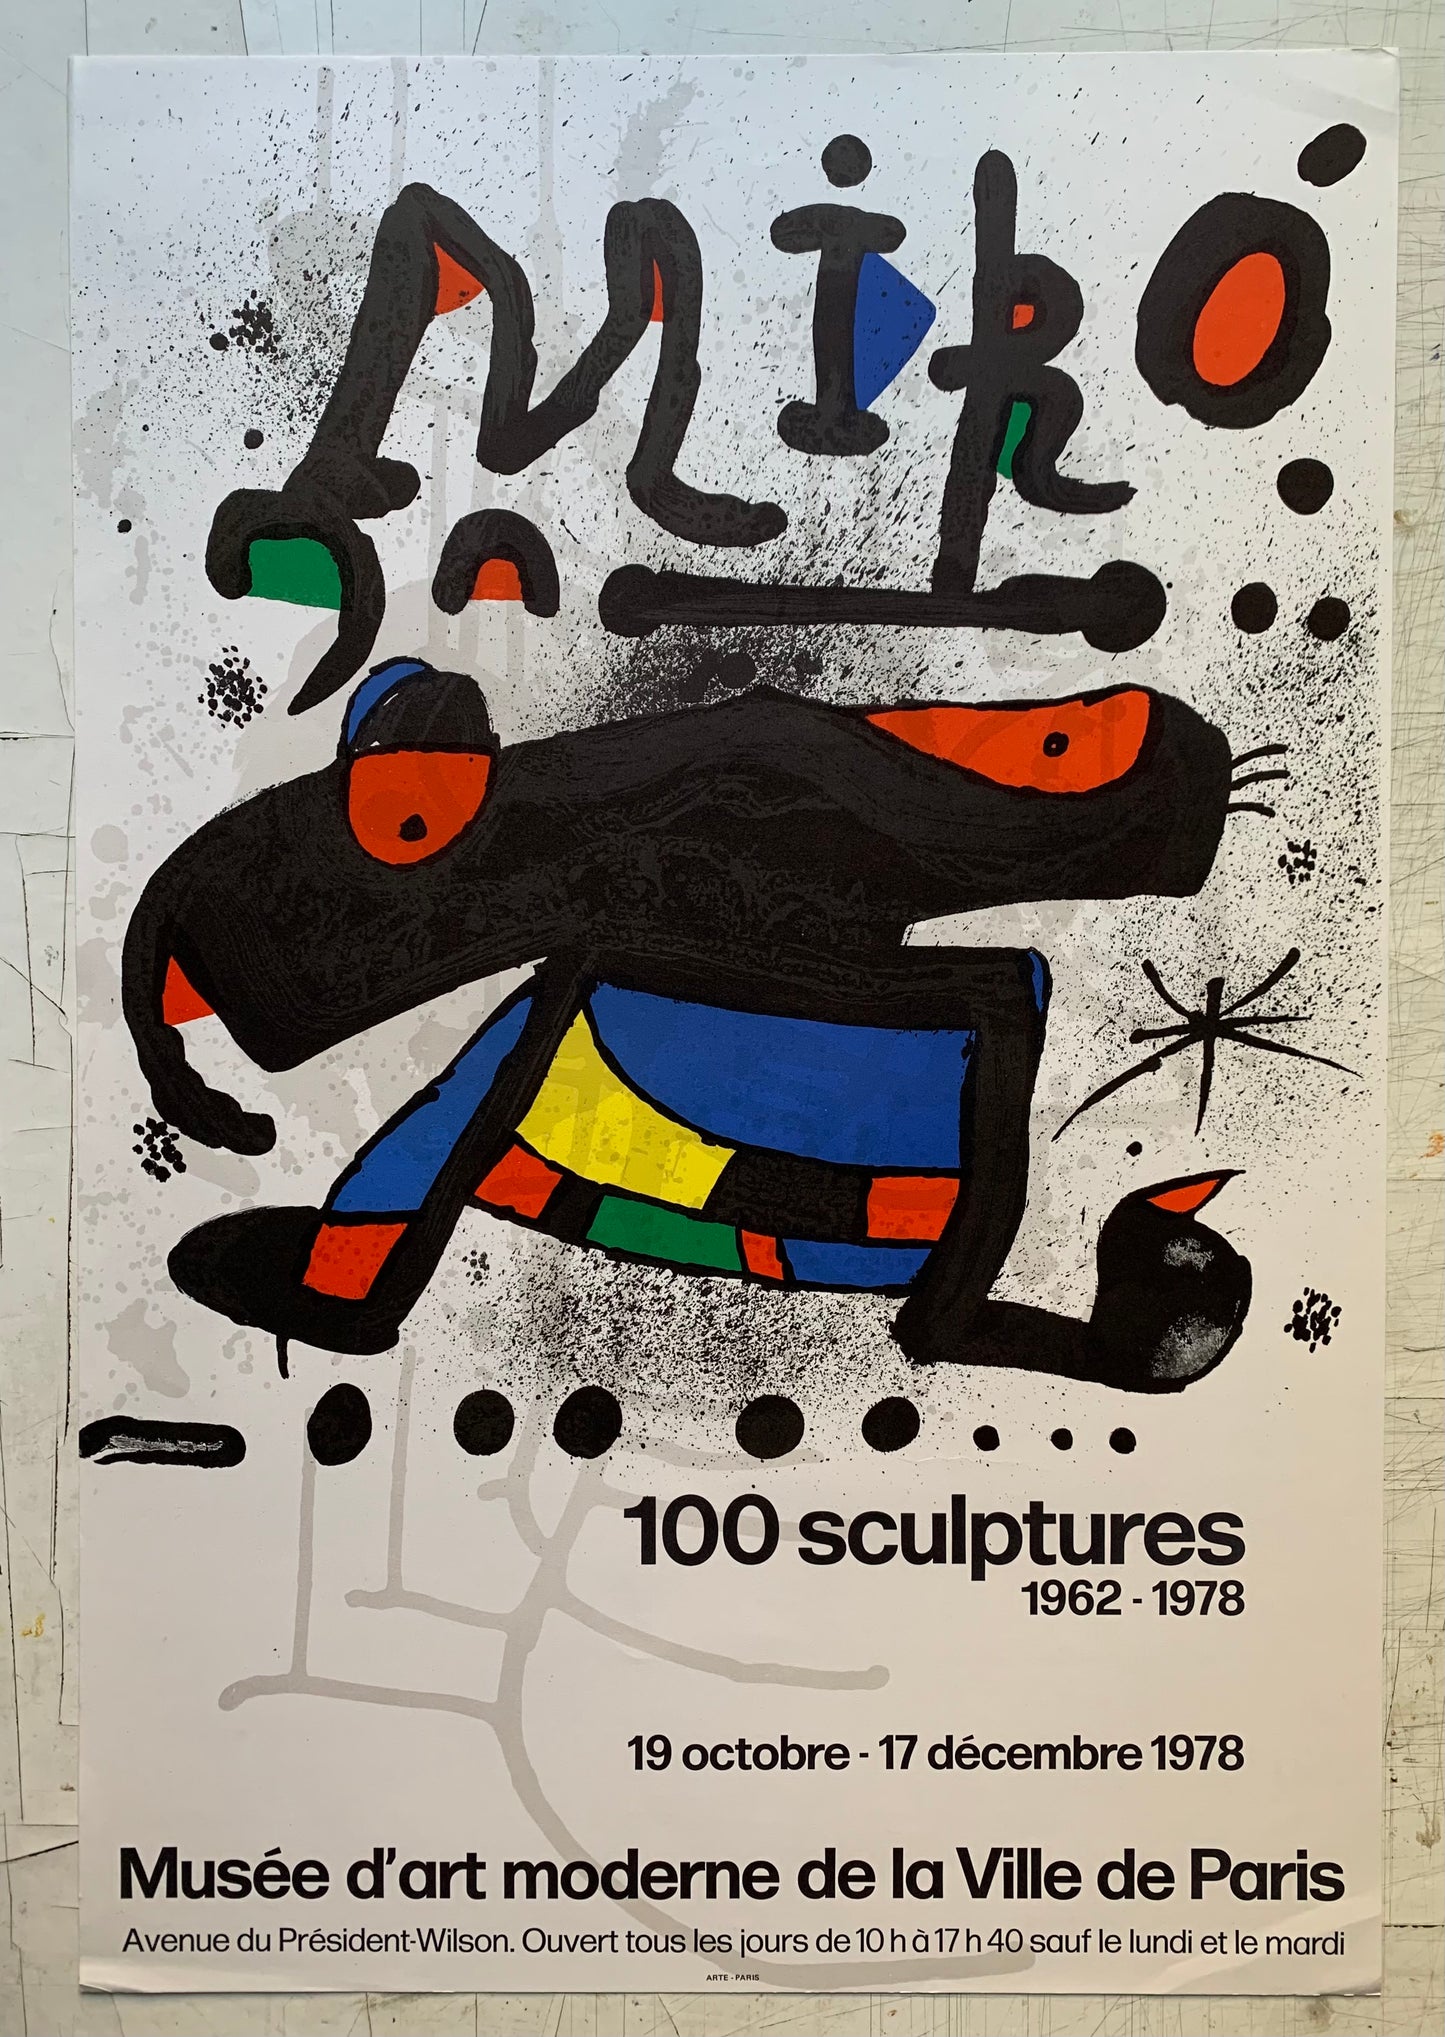 Joan Miró. “Miró, 100 sculptures”, 1978